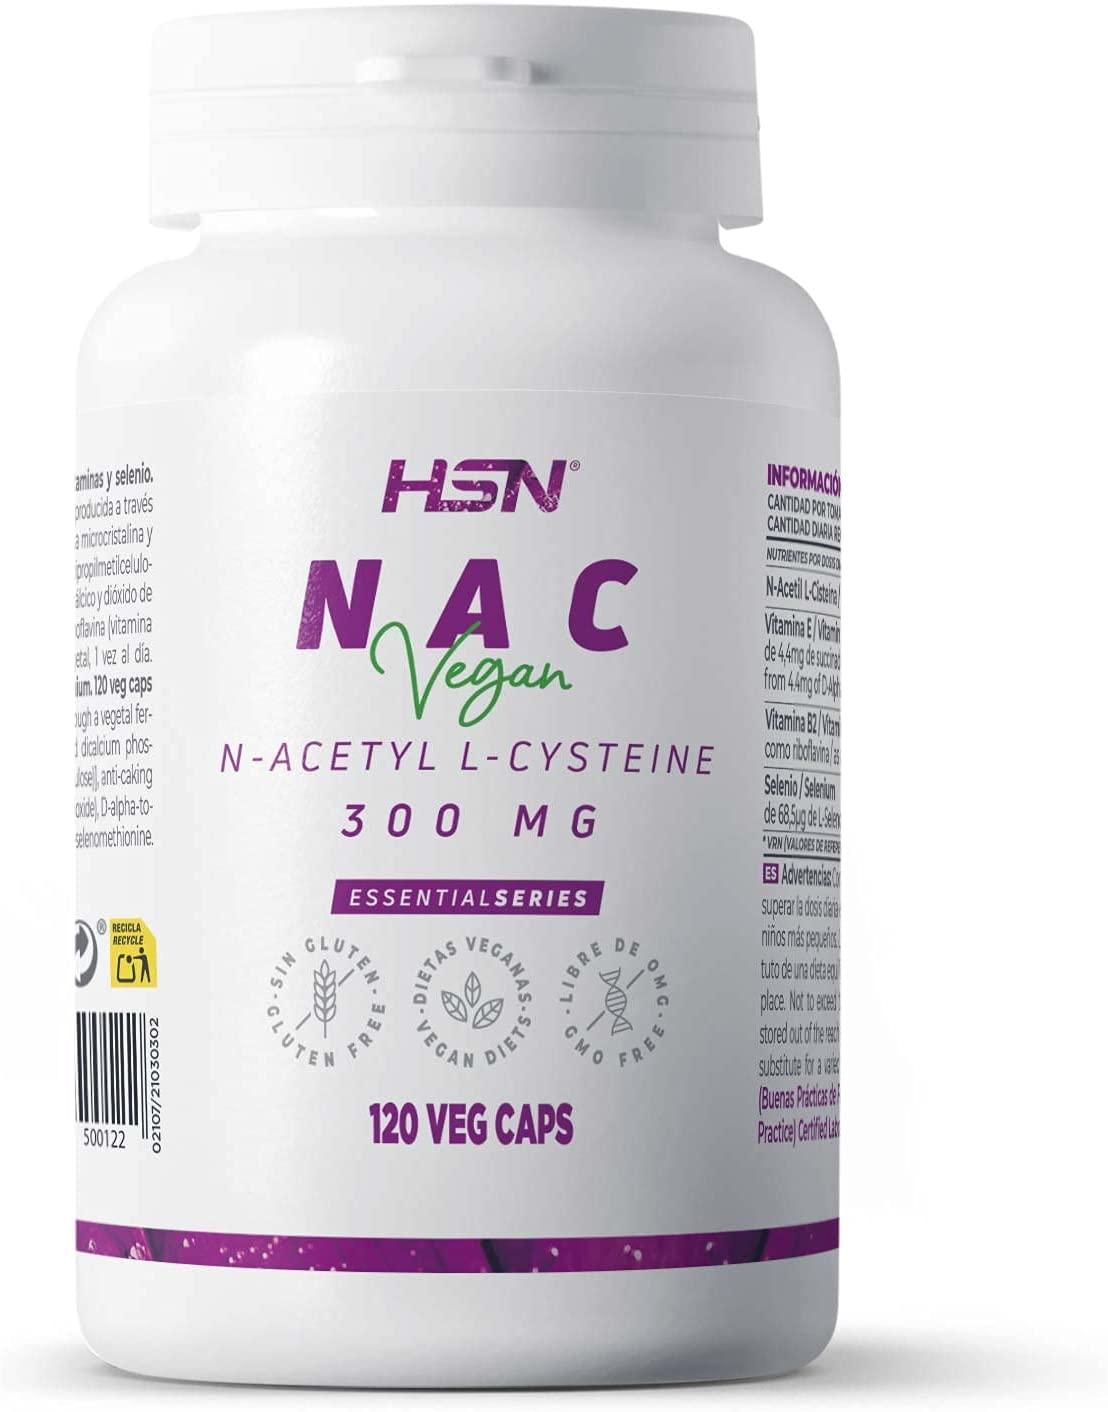 NAC (N-ACETIL-L-CISTEINA) 300mg - 120 cápsulas